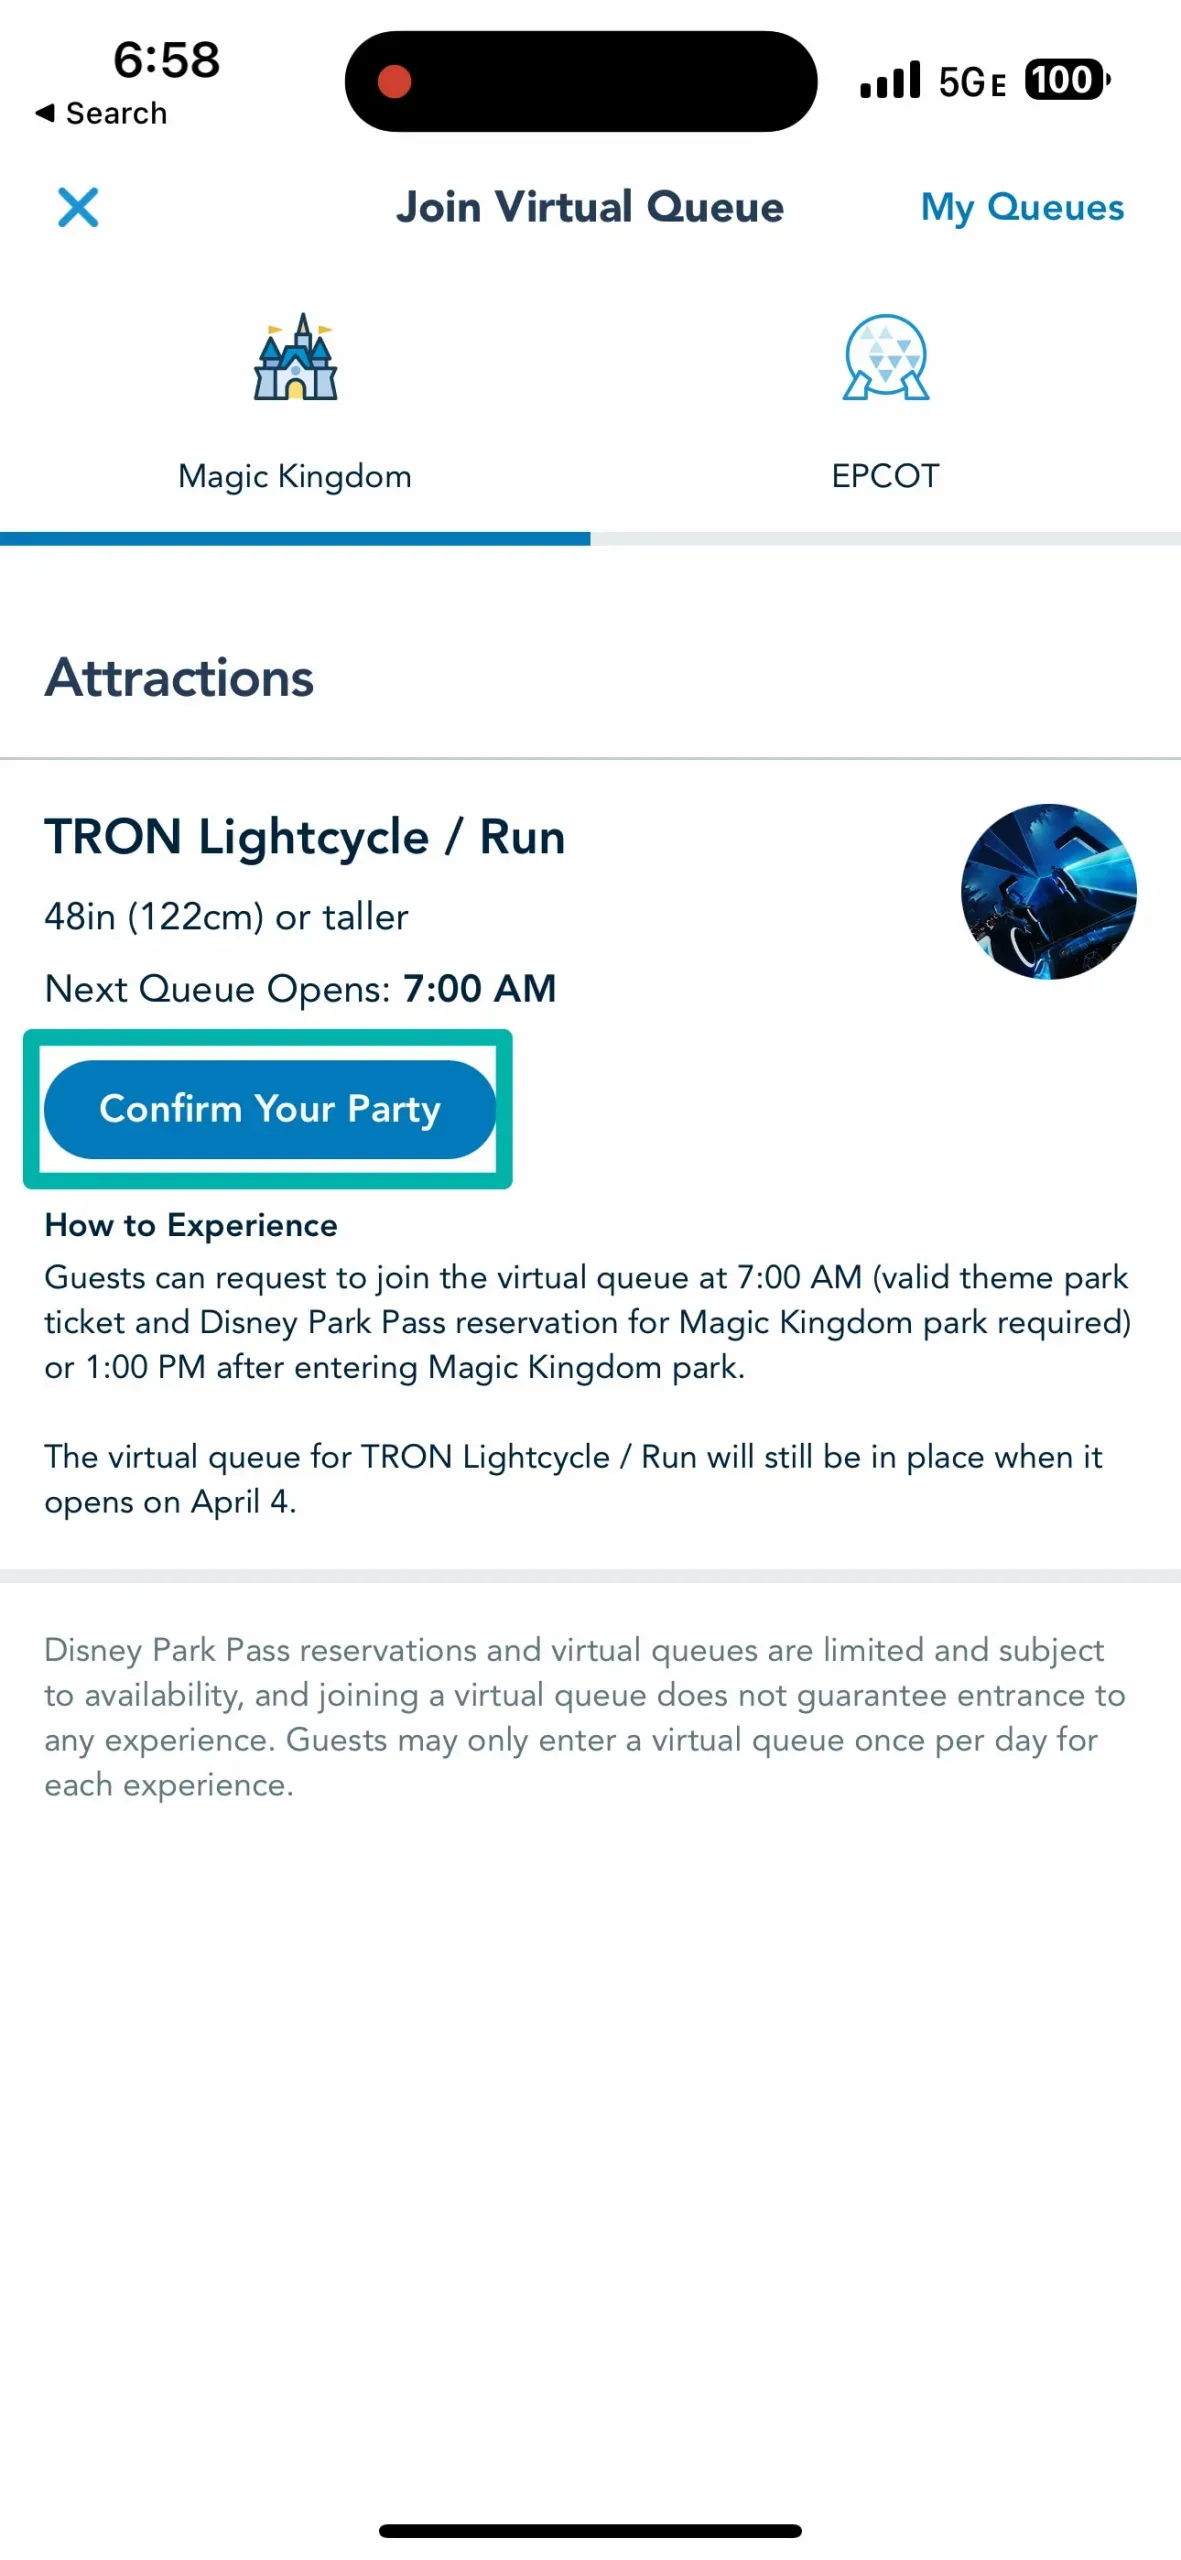 Confirm Your Party - Disney World Virtual Queue